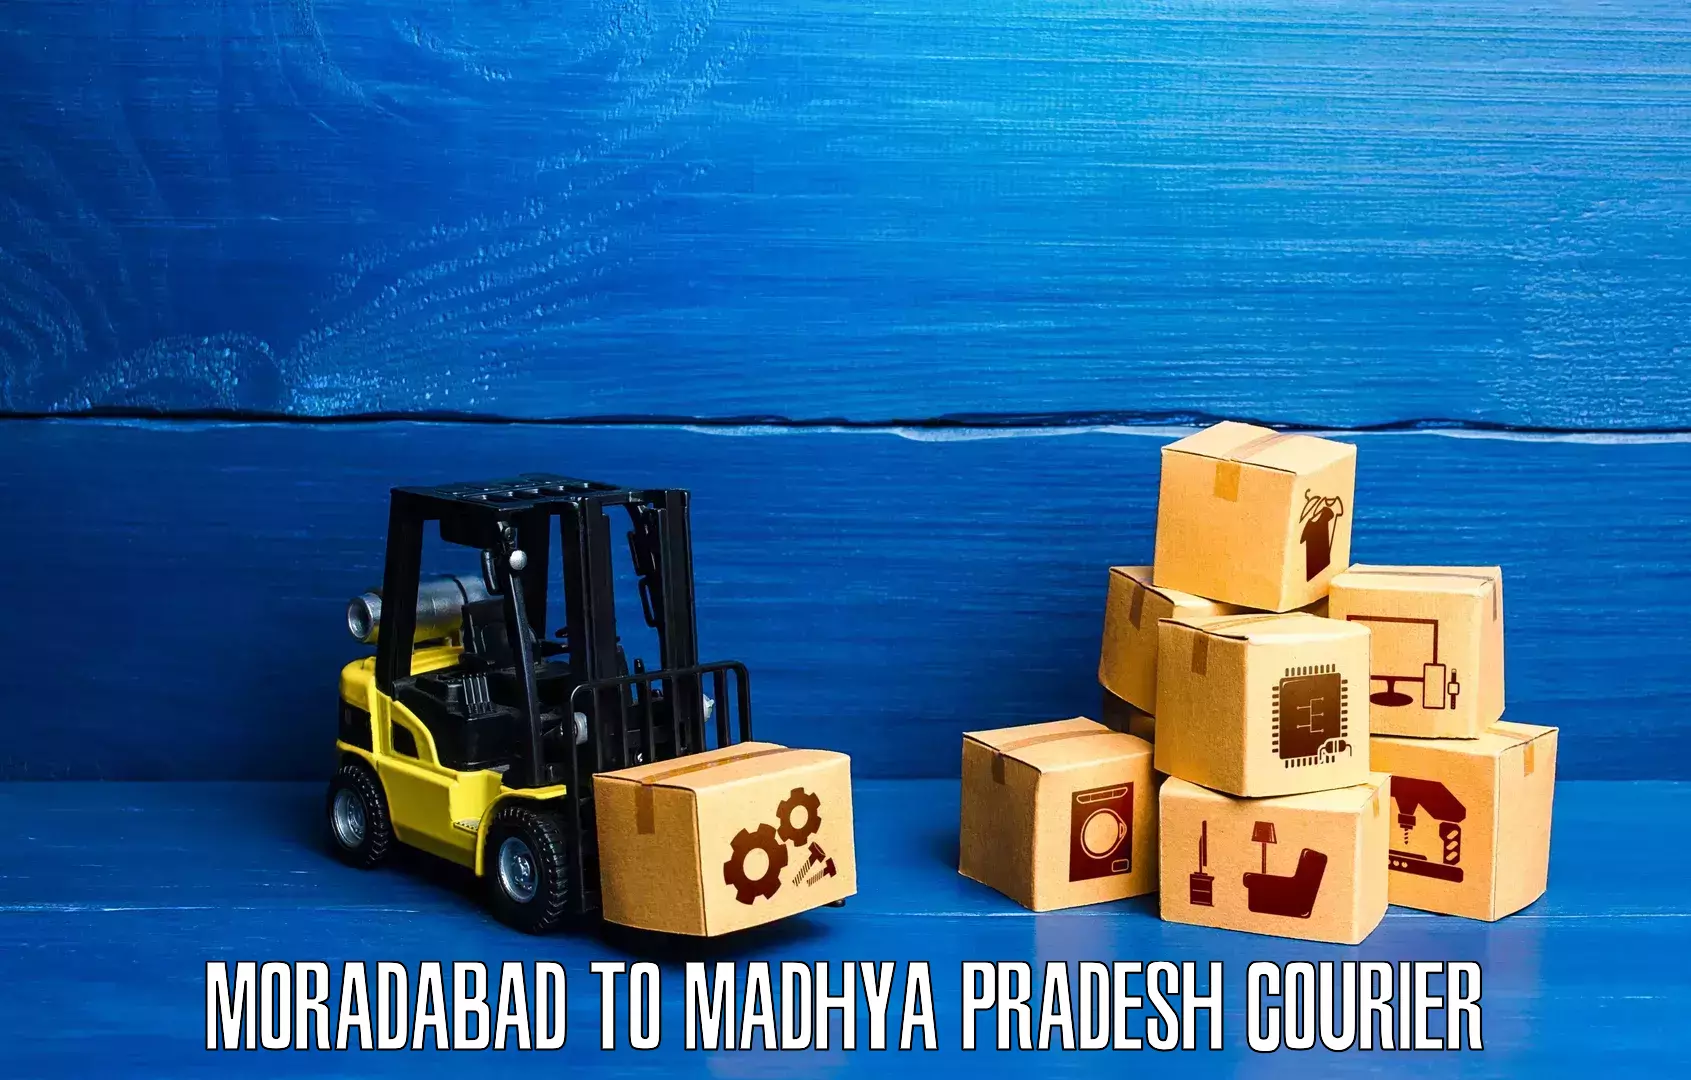 Courier service efficiency Moradabad to Raipur Karchuliyan